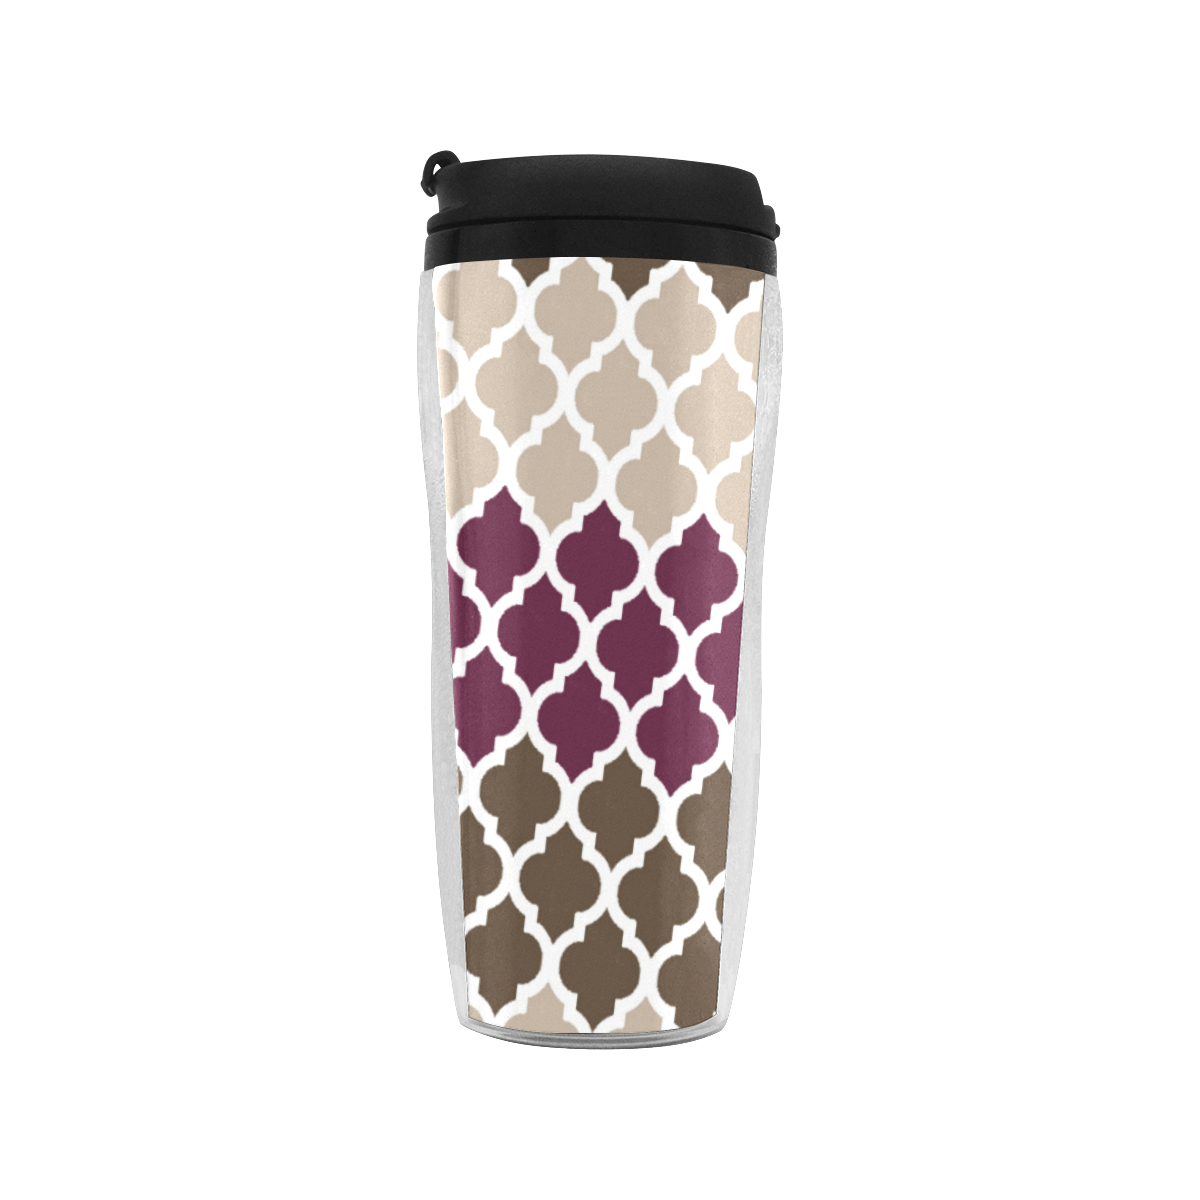 stripe lace pattern Reusable Coffee Cup (11.8oz)